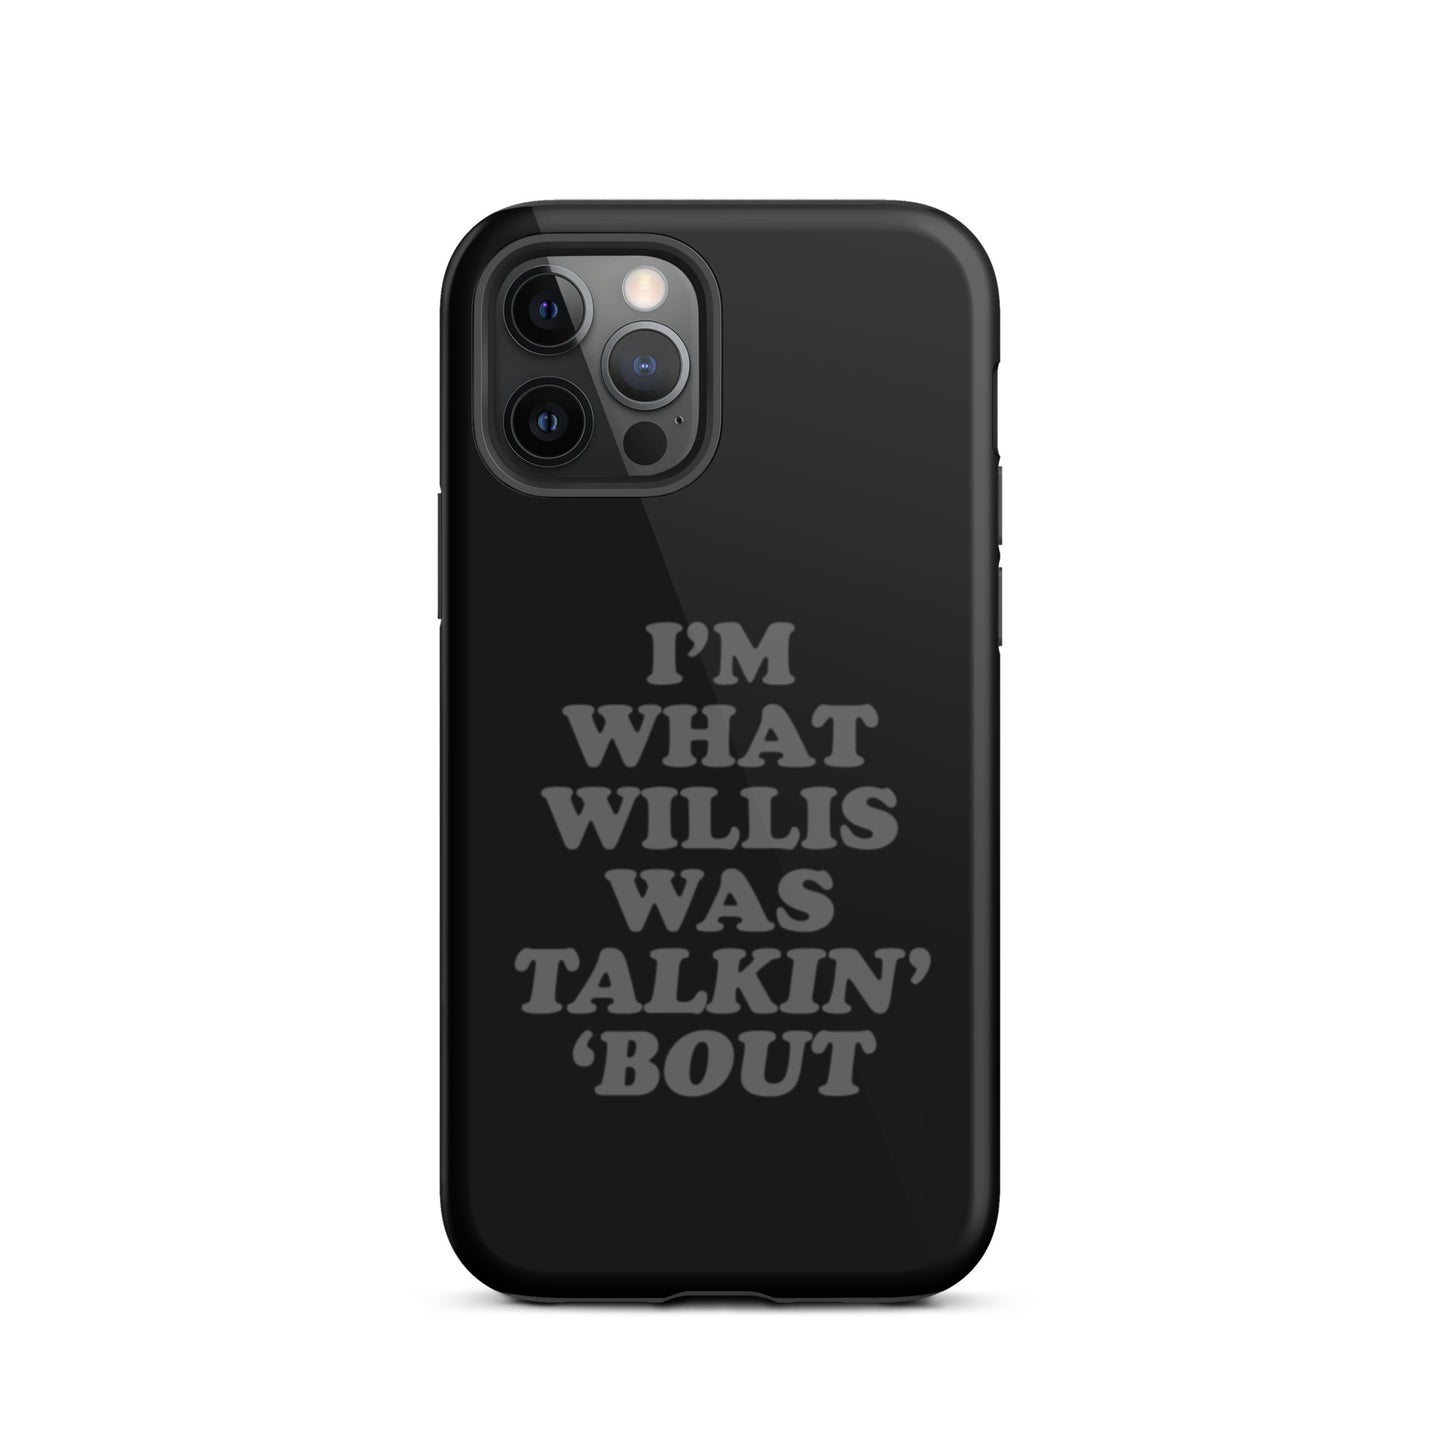 "I'm What Willis Was Talkin Bout" Tough iPhone Case - Black